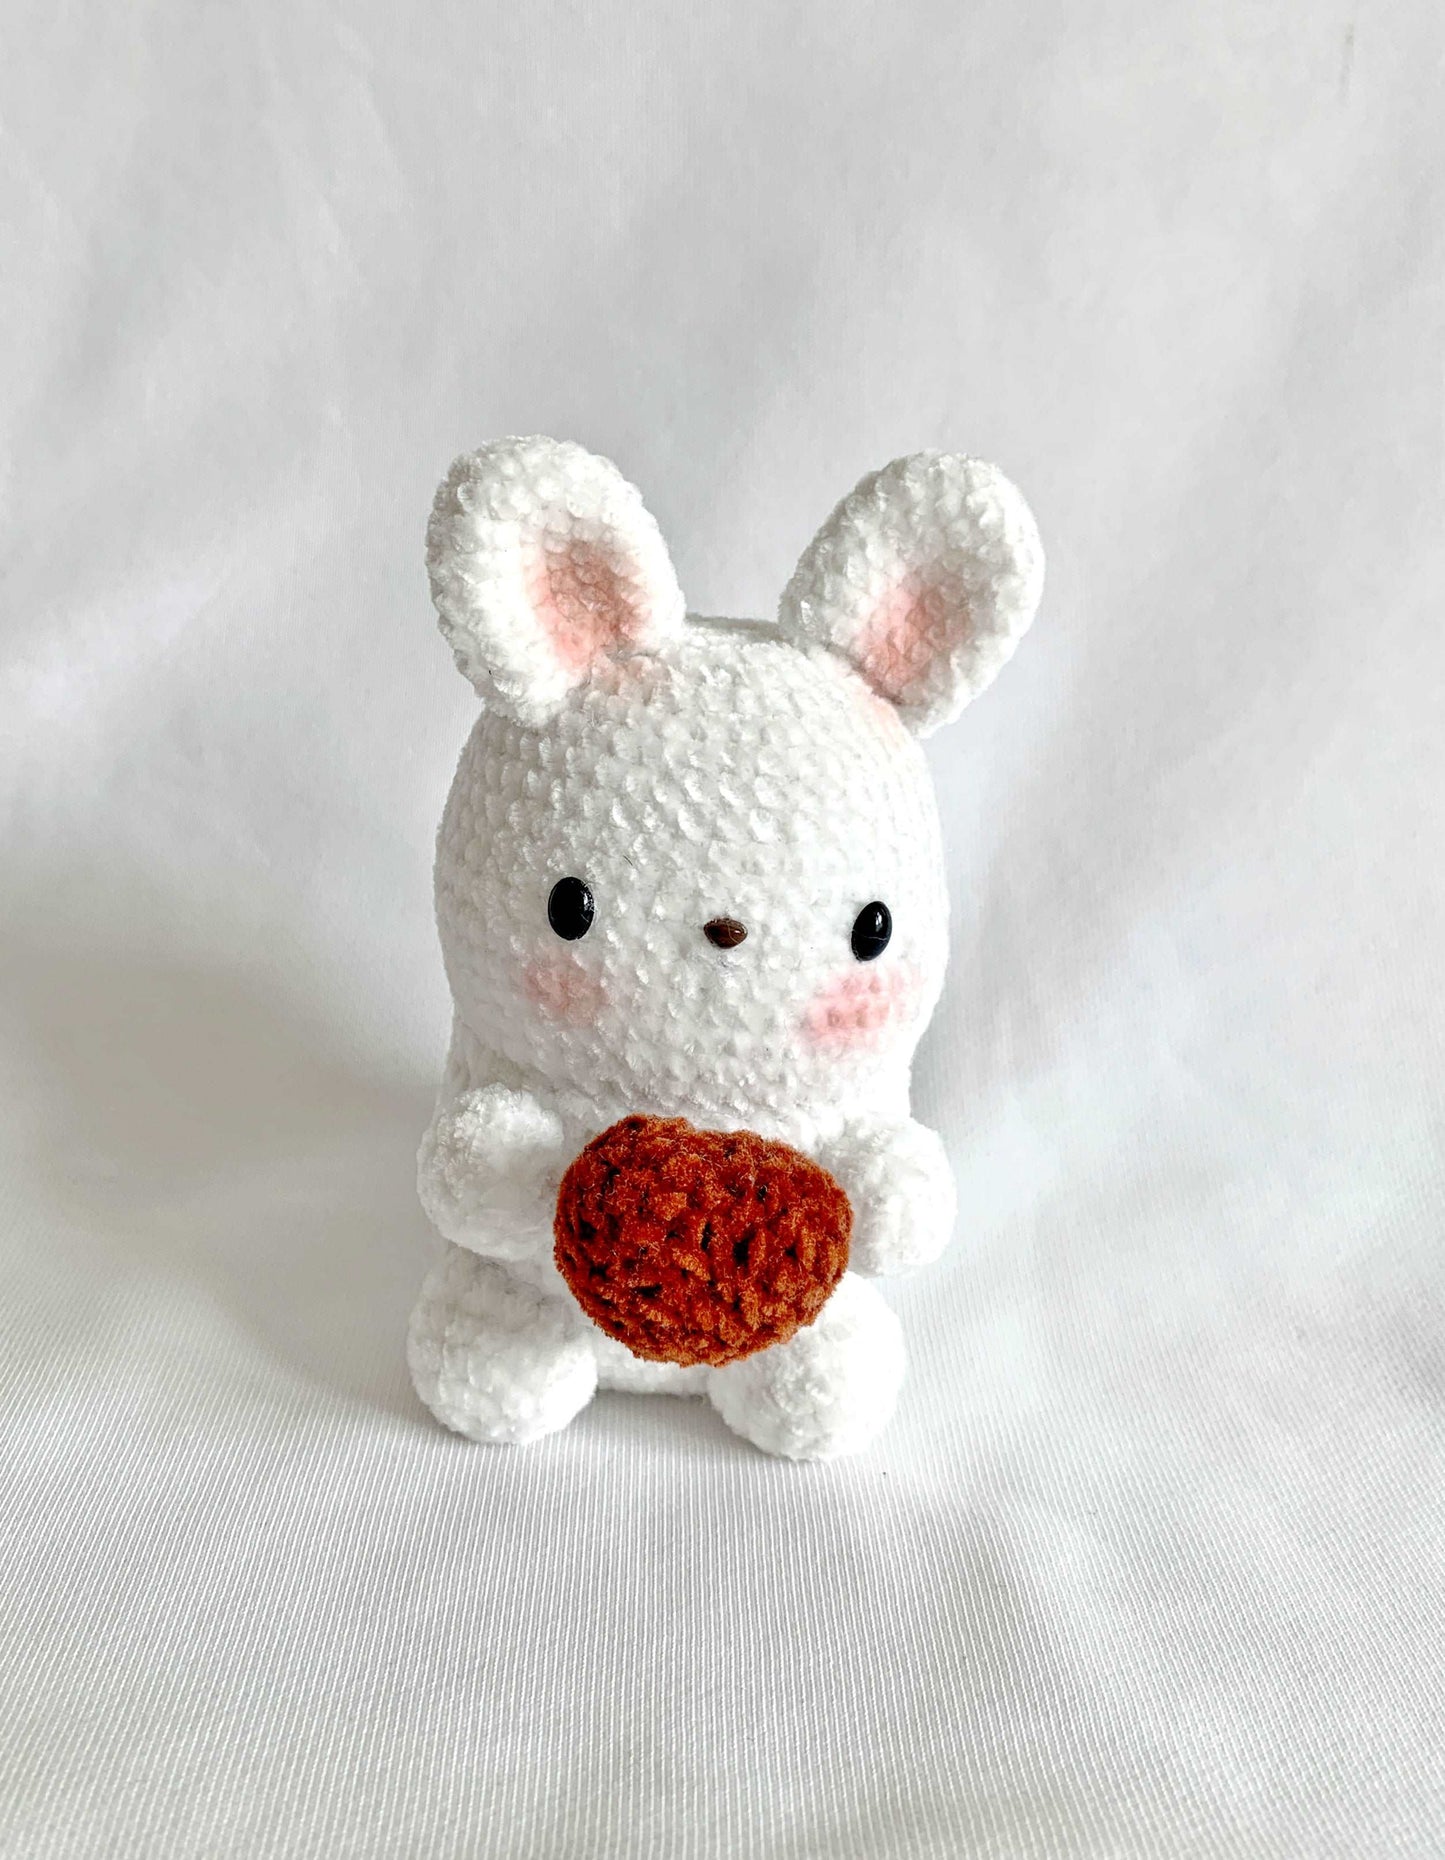 Adorable Handmade Crochet Bunny Toy for Gift